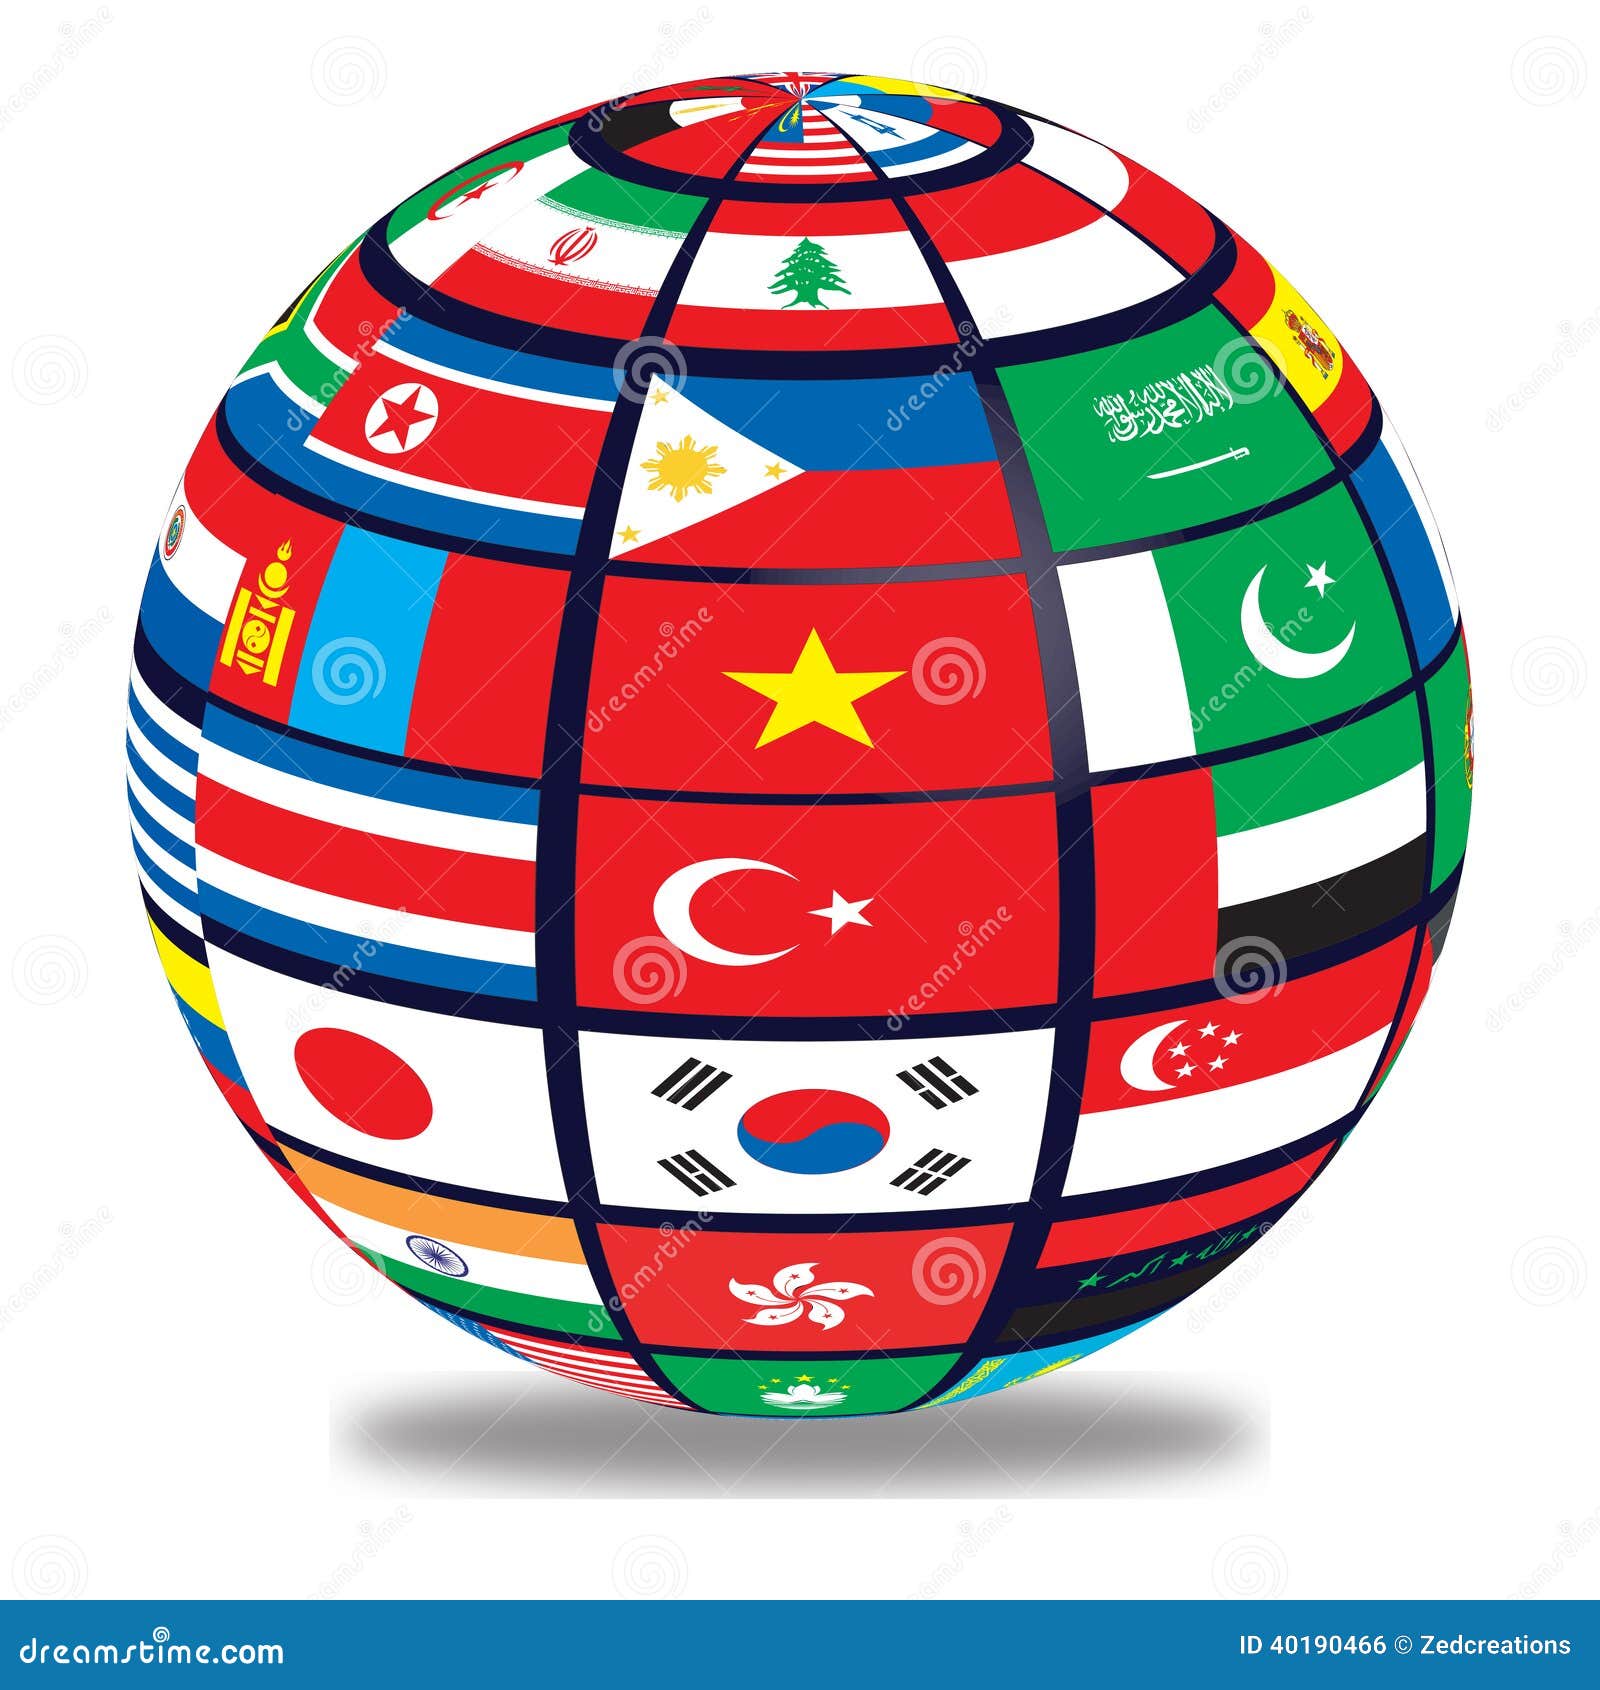 free clipart globe flags - photo #22